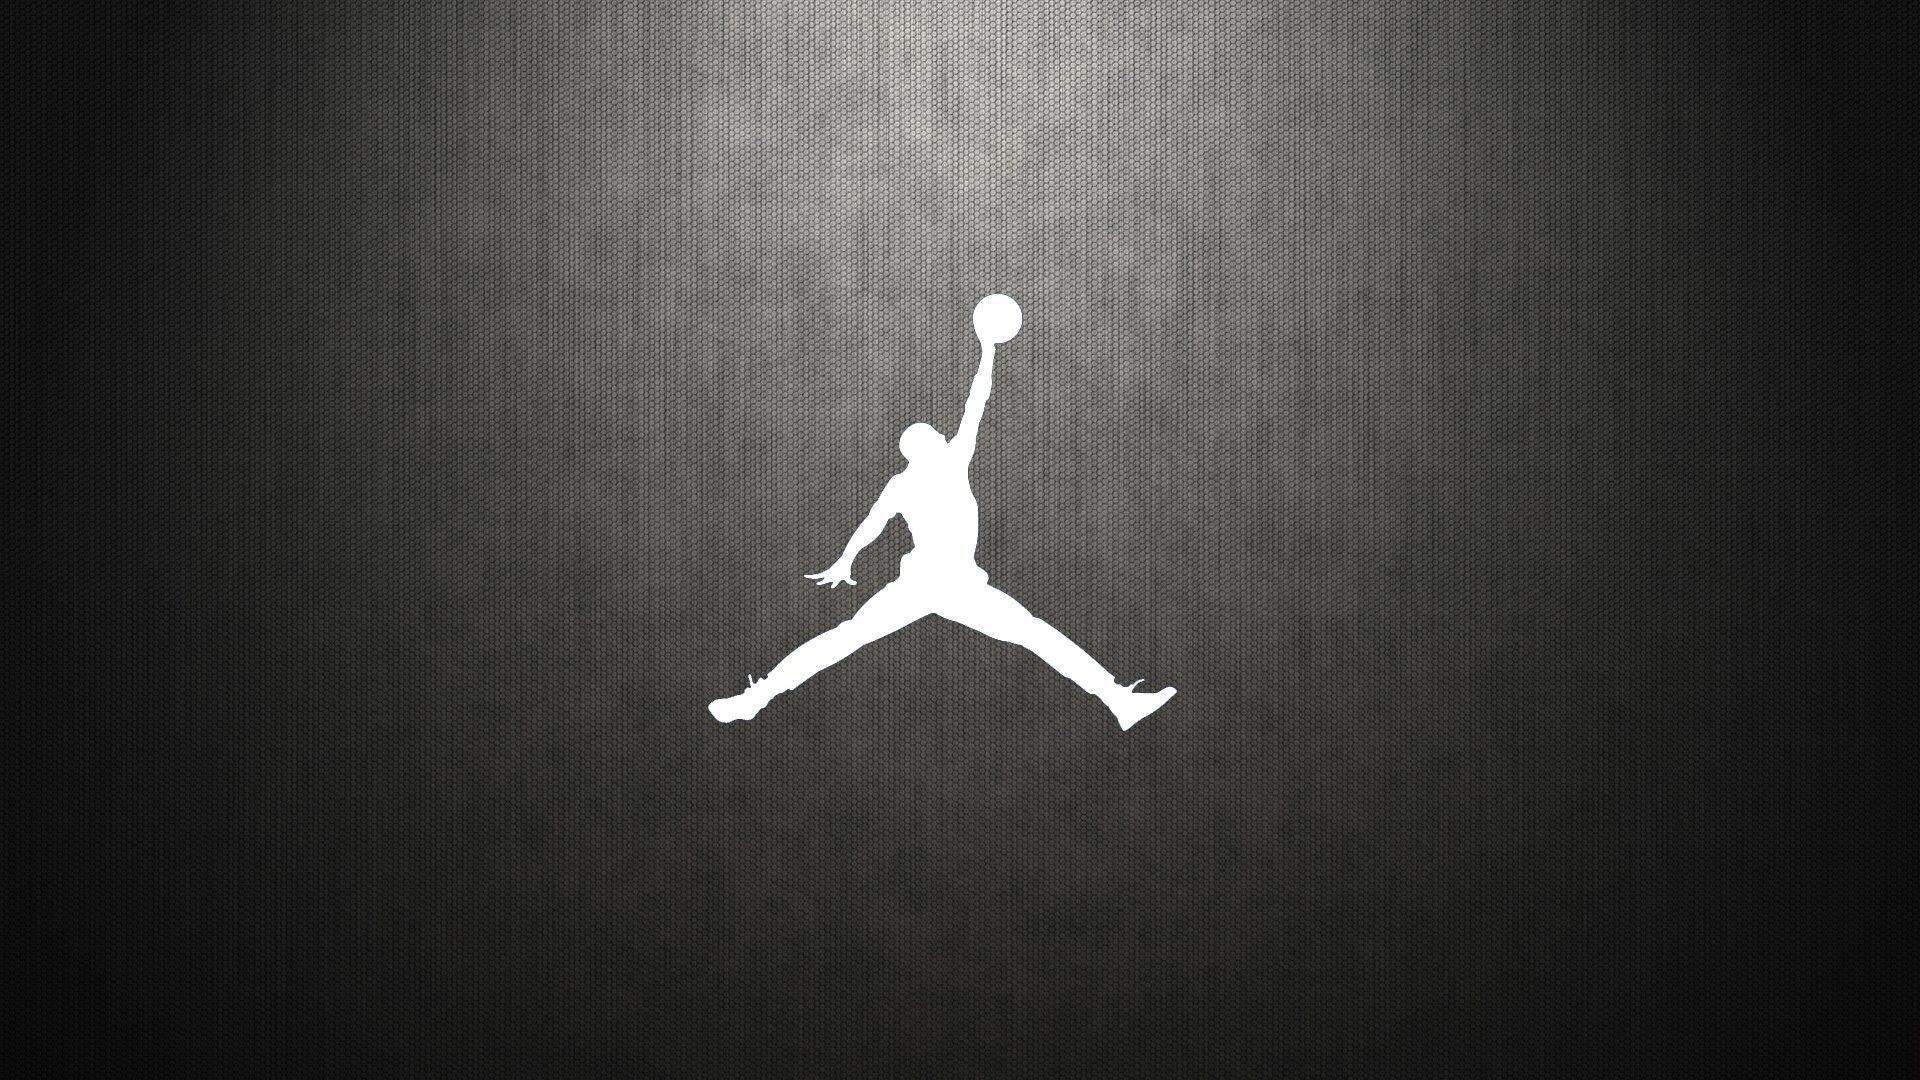 Basketball Wallpaper HD. Wallpaper, Background, Image, Art